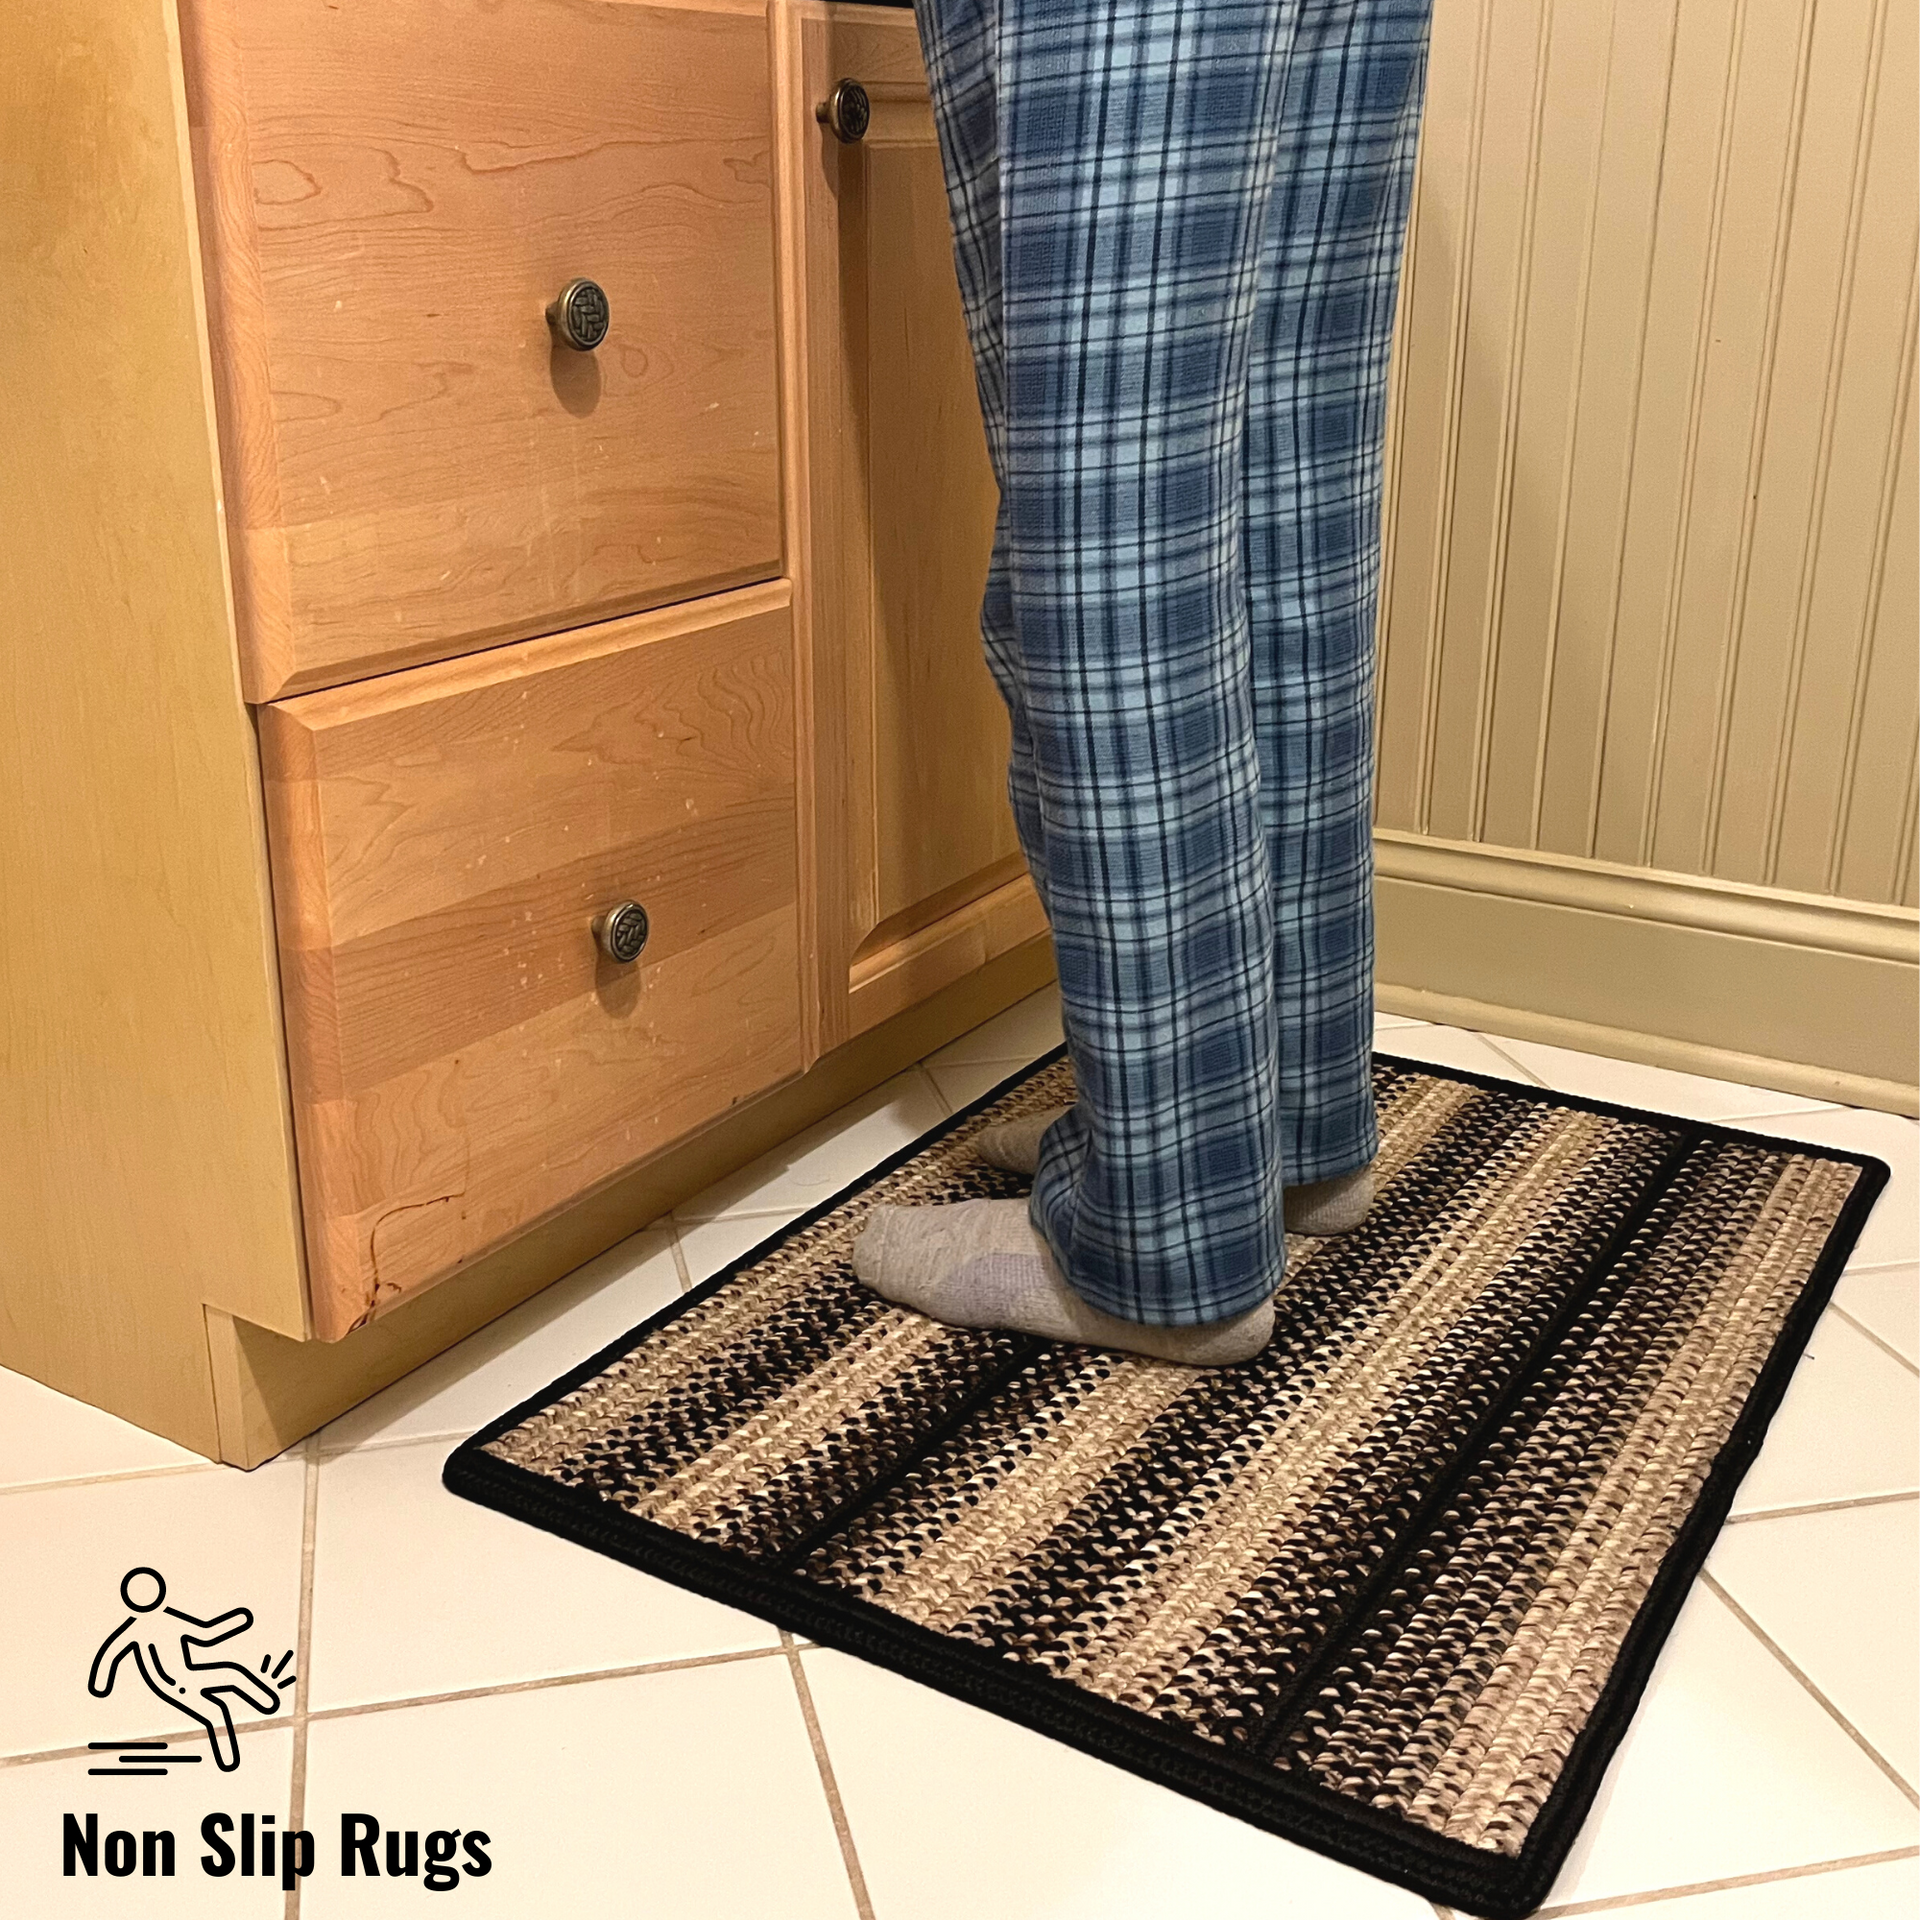 Non Slip, Waterproof Rug - Chicory - Entryway, Kitchen, Bathroom